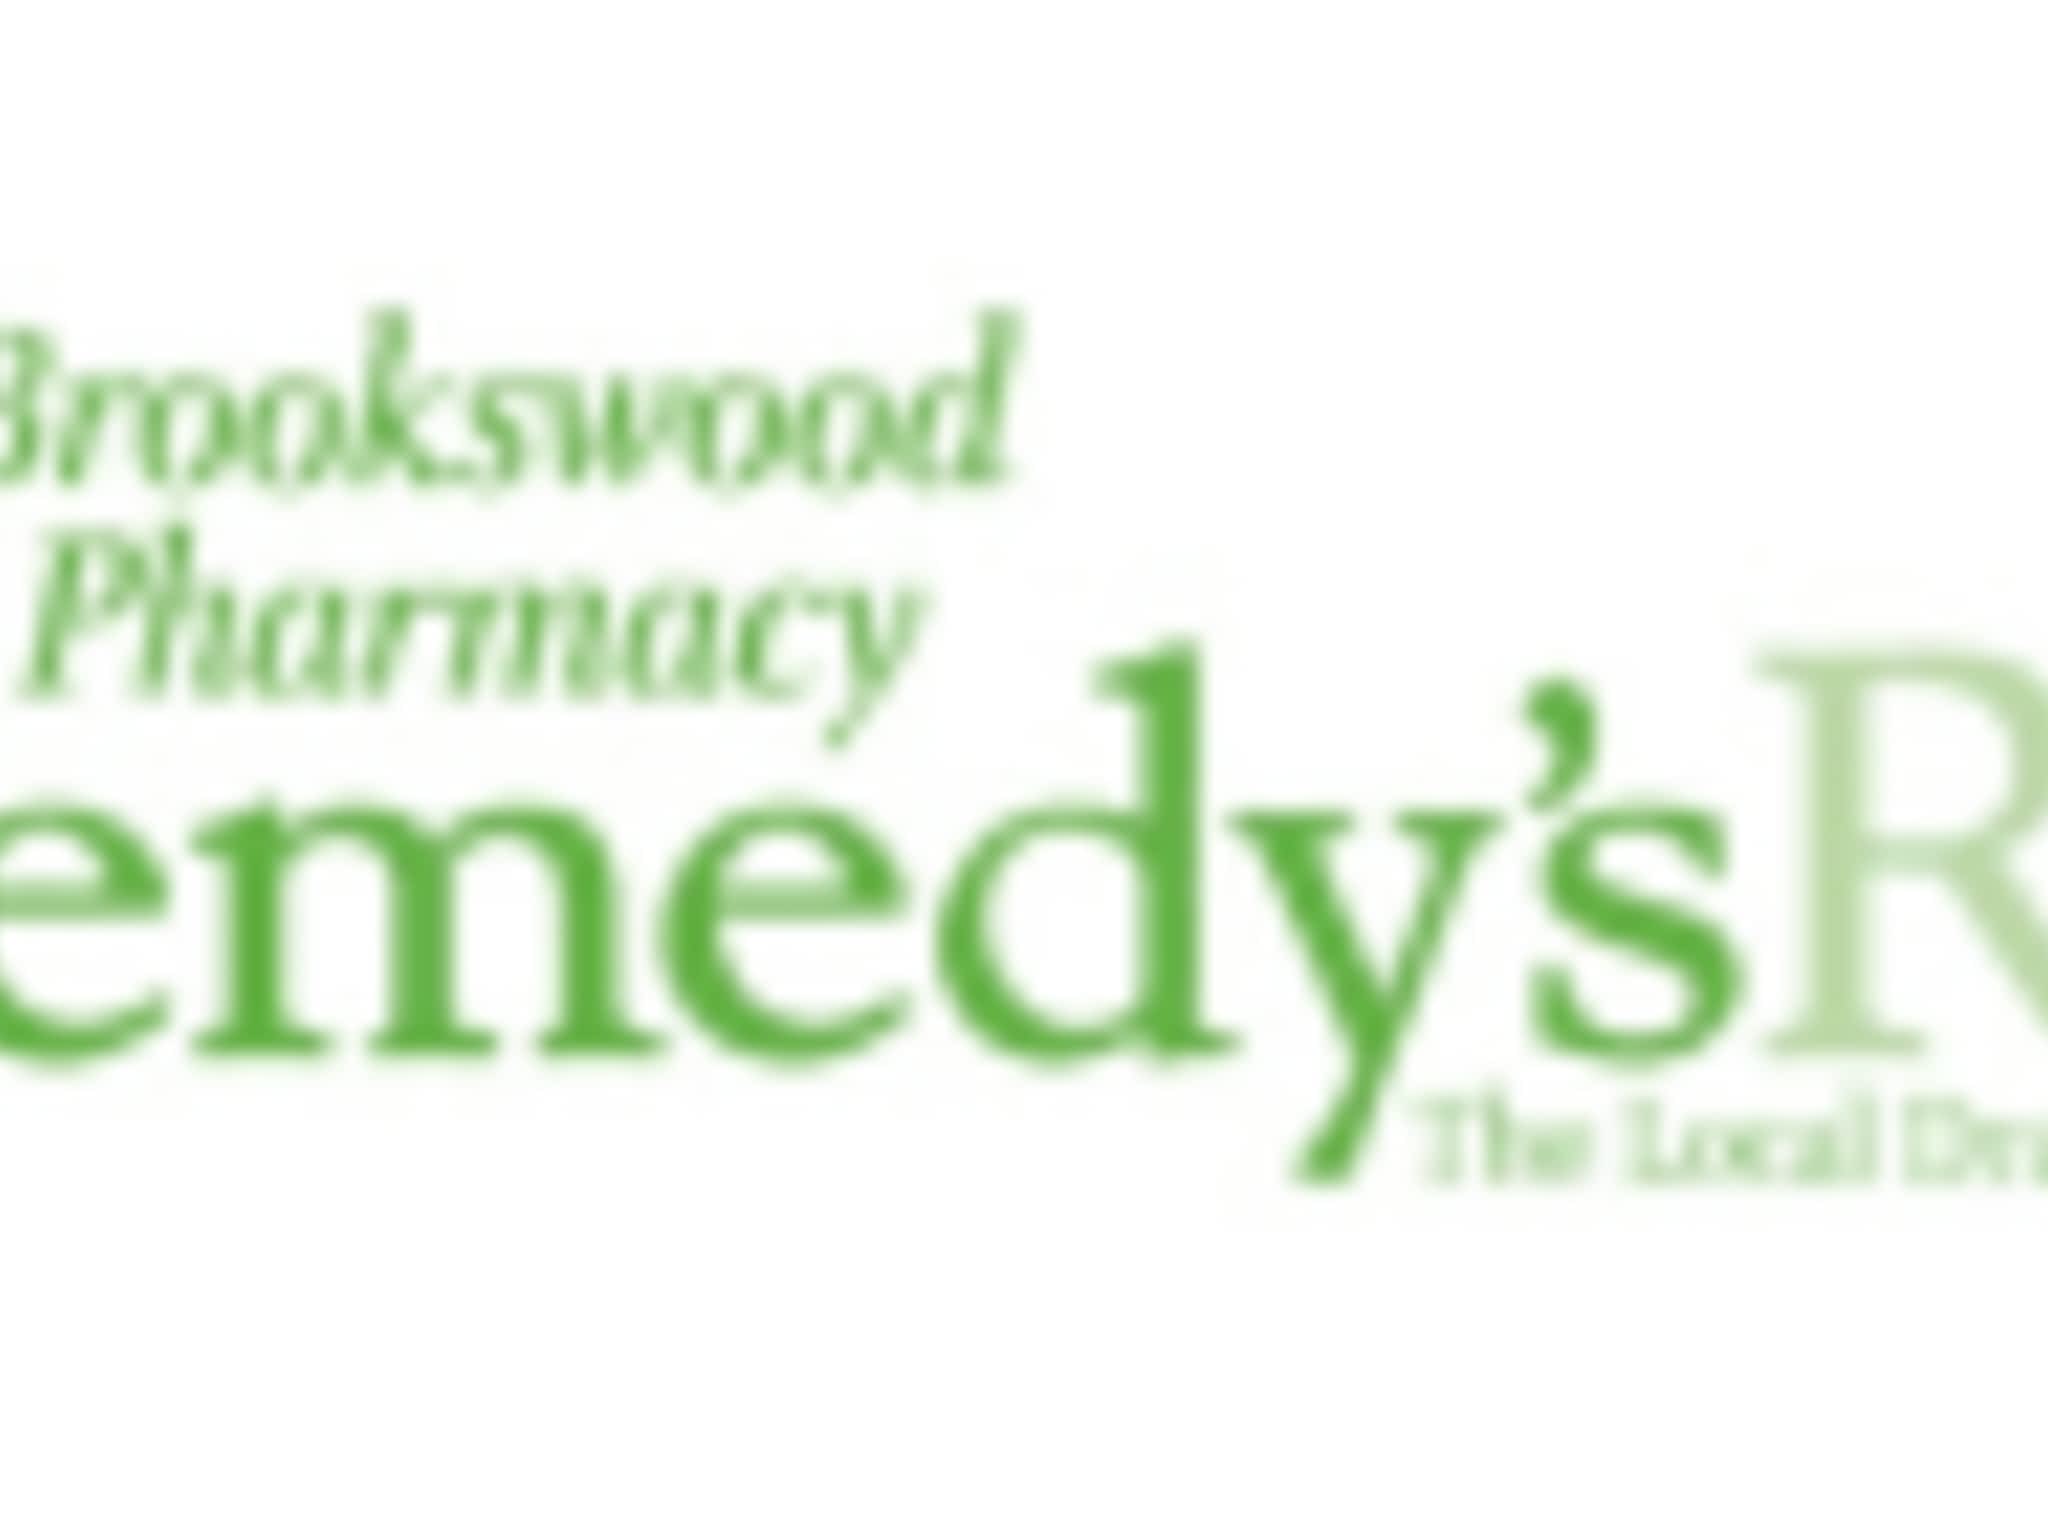 photo Brookswood Remedy's Rx Pharmacy